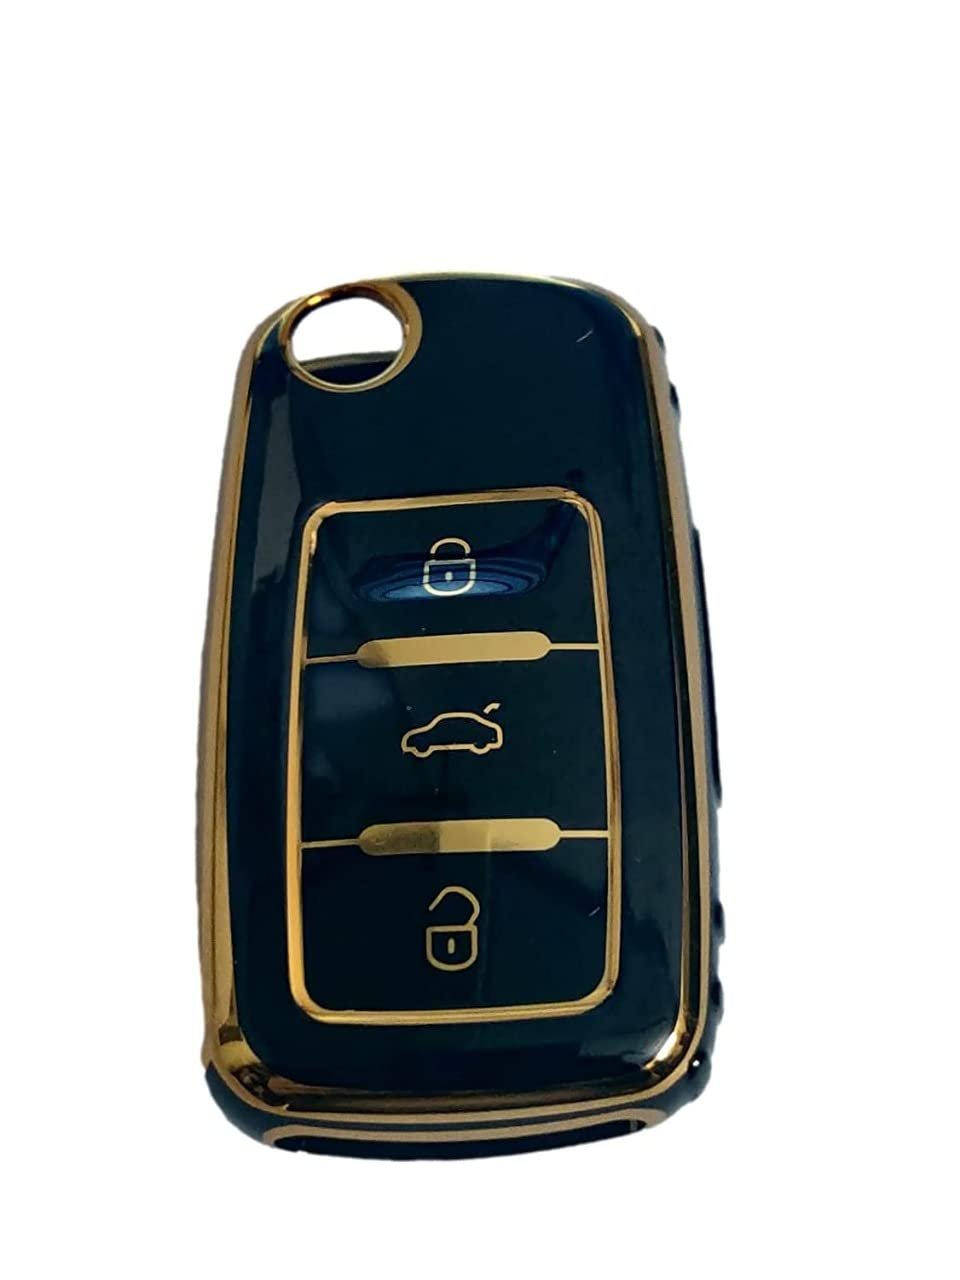 TPU Carbon Fiber Car Key Cover Compatible with Volkswagen Polo Vento Jetta Ameo Passat Skoda Rapid Laura Superb Octavia Fabia Yeti Folding Key (Black) Image 